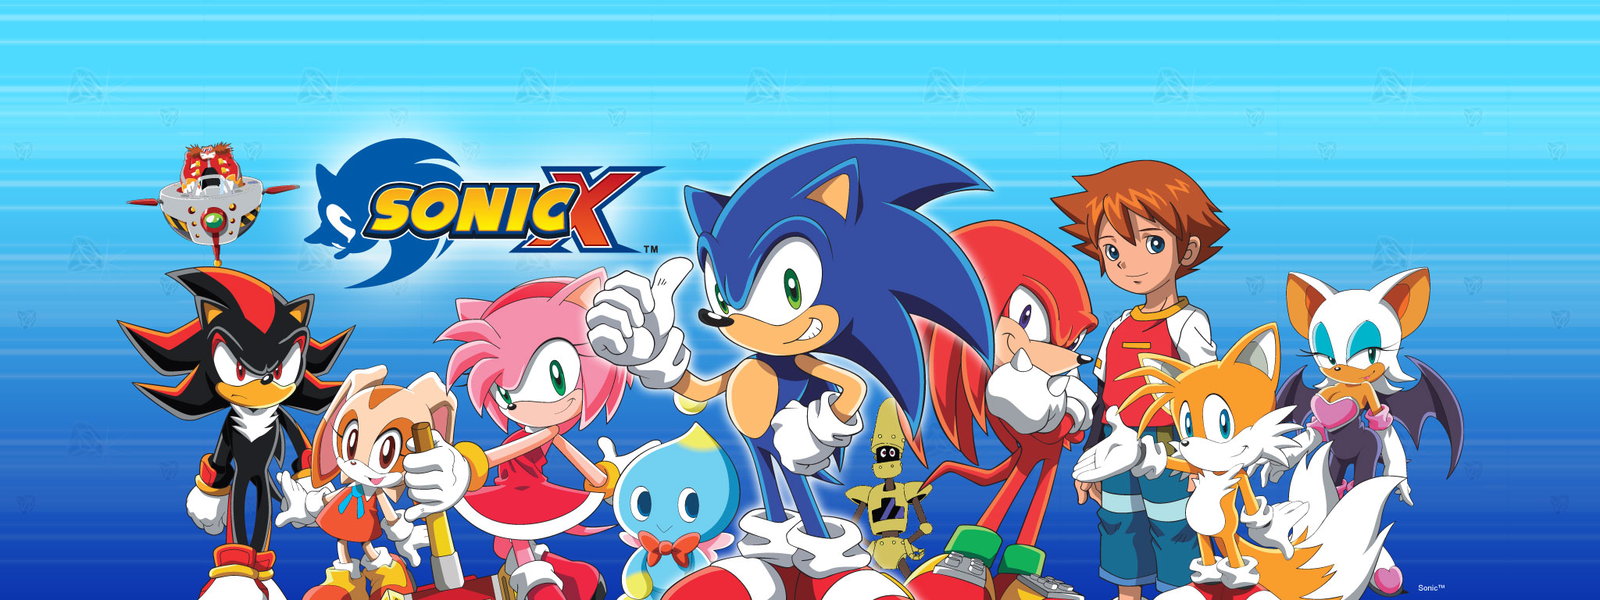 Sonic X Anime and OVA Movie the Japanese take on the hedgehog